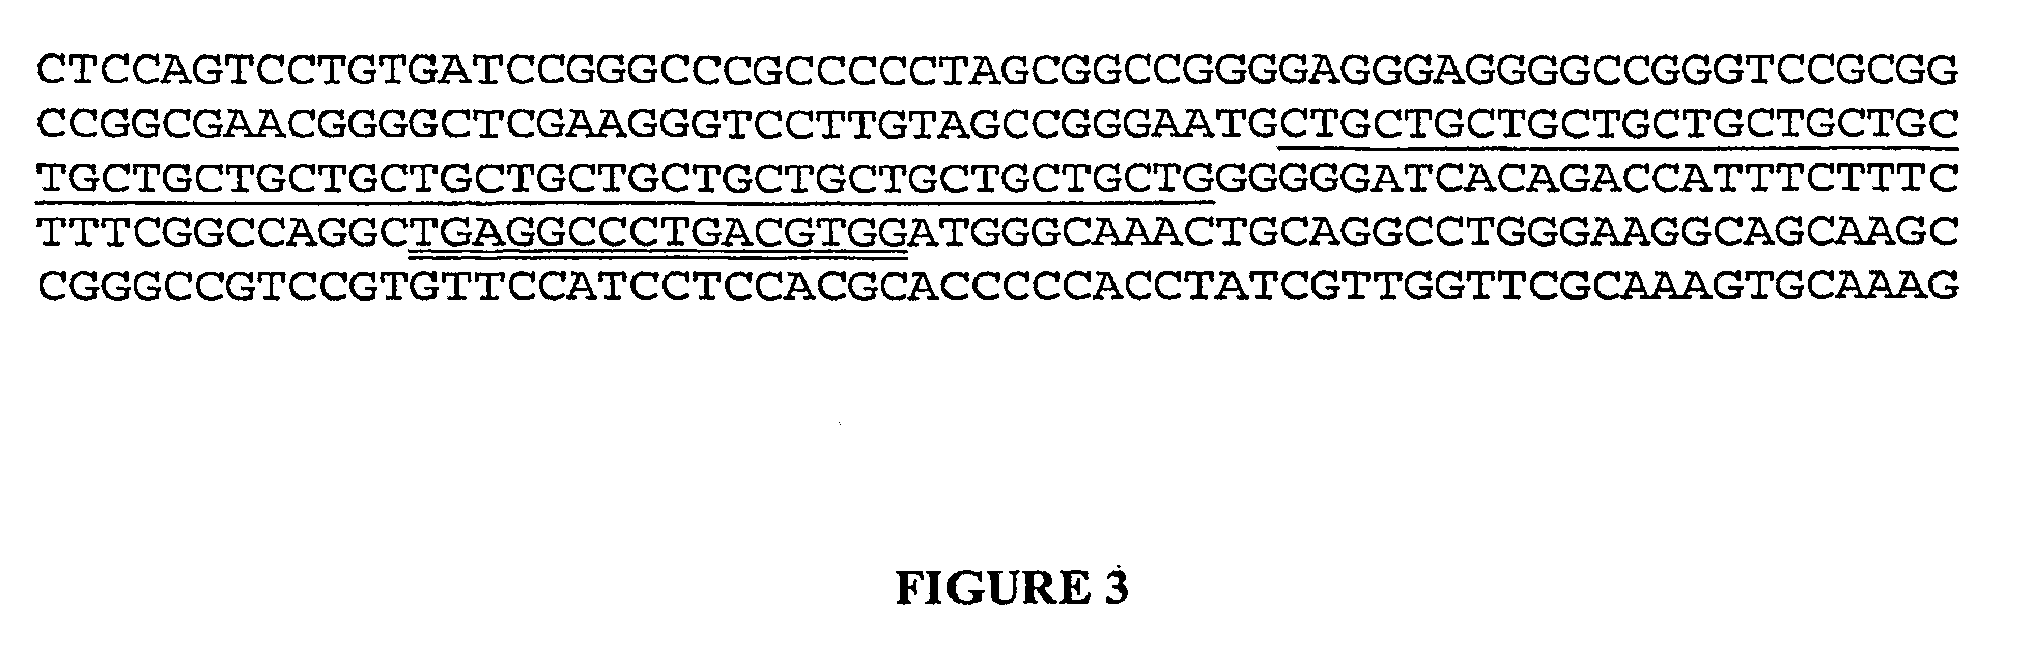 Nucleic acid size detection method